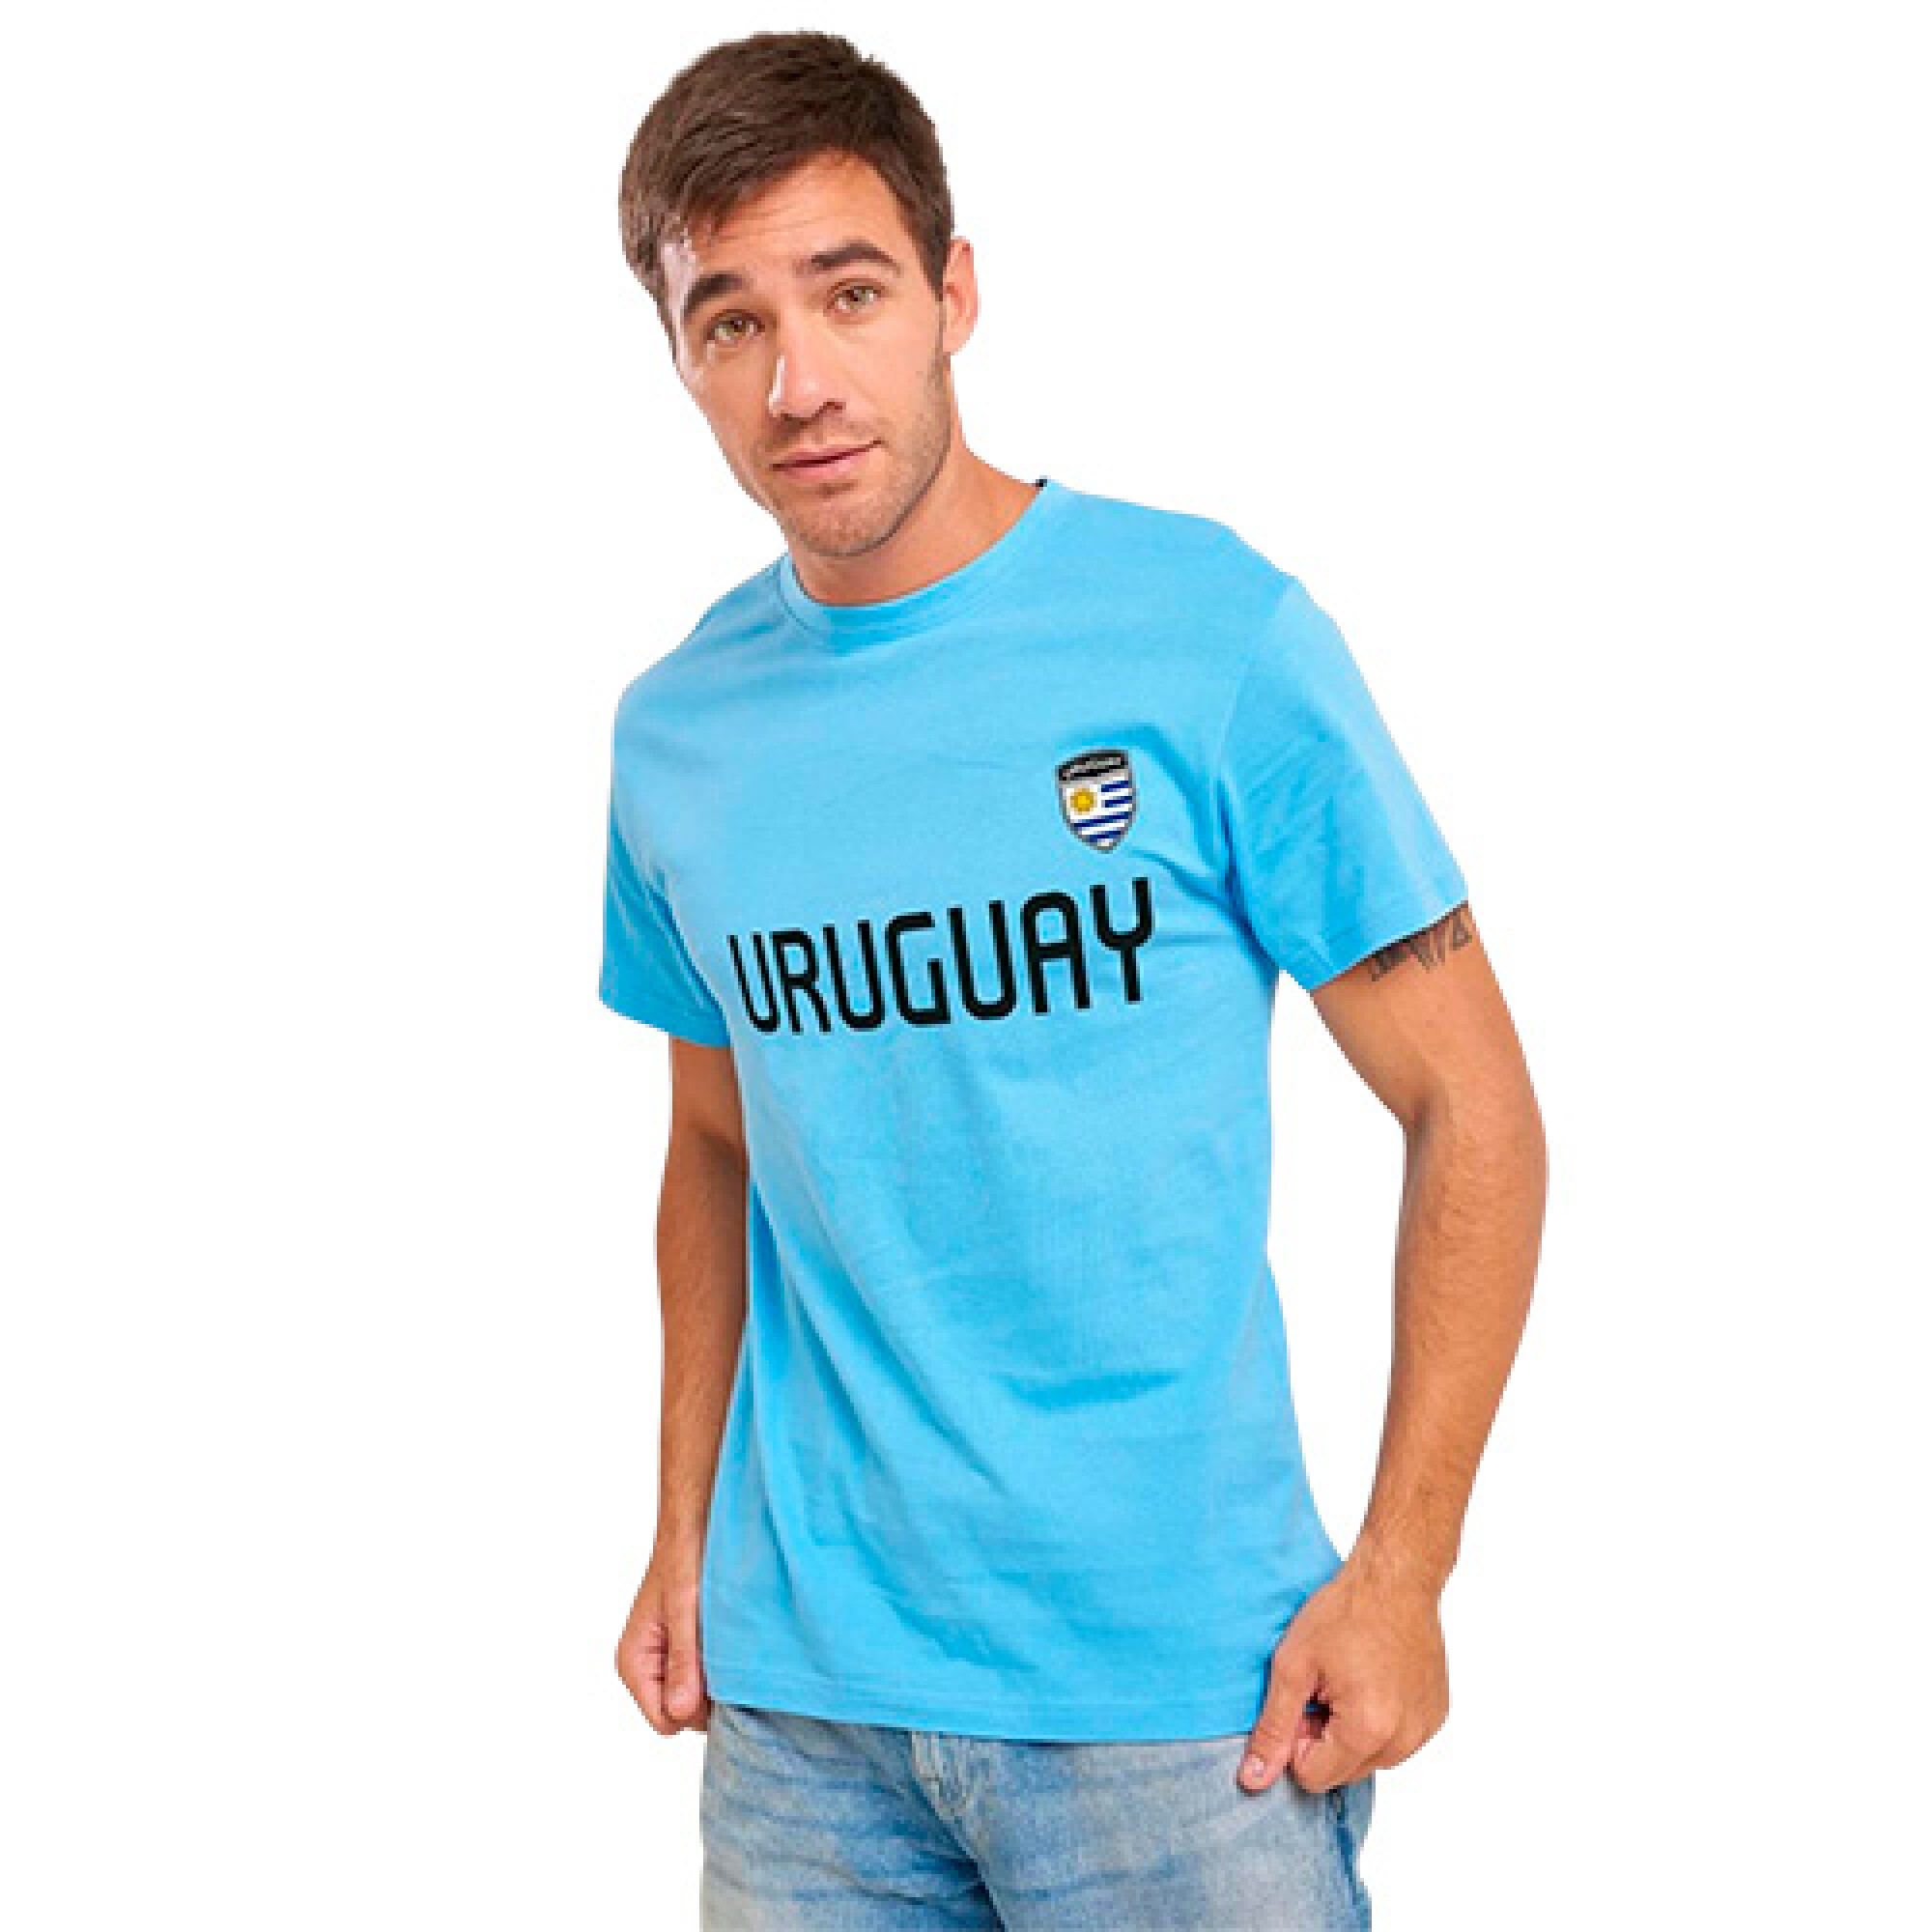 Camiseta URUGUAY escudo celeste